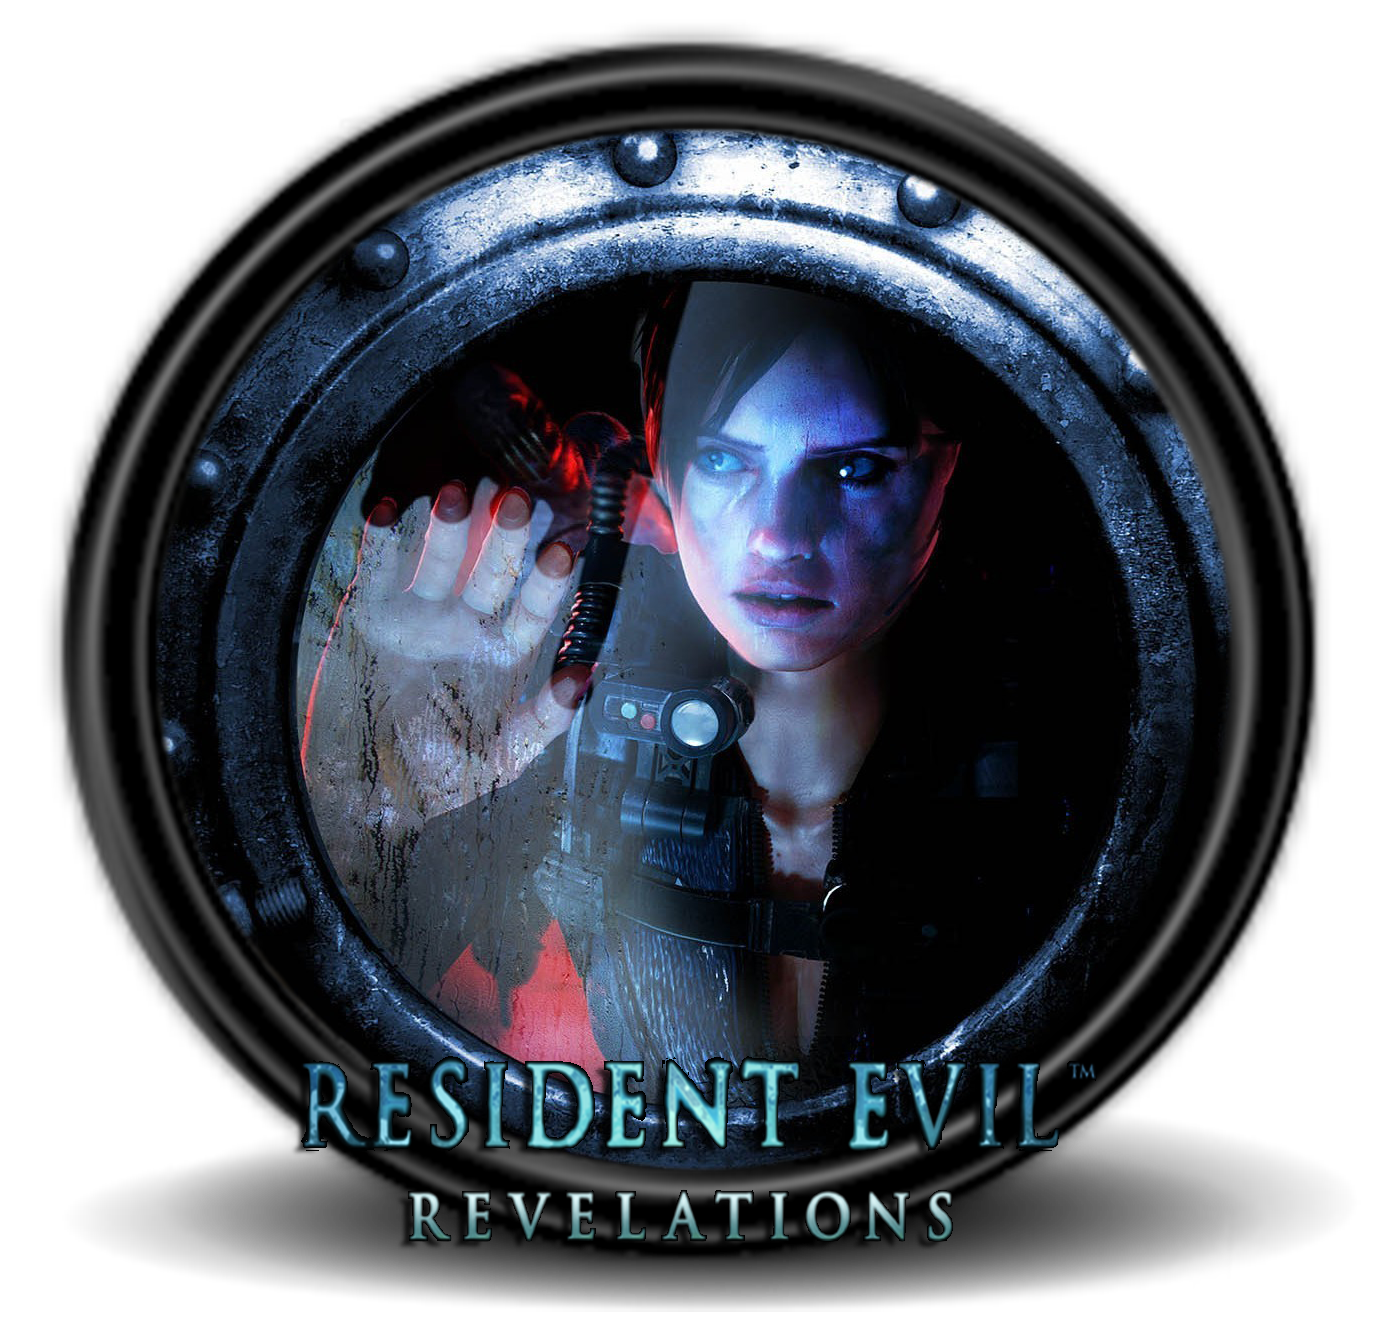 Evil Dead Regeneration Icon by EzeVig on DeviantArt